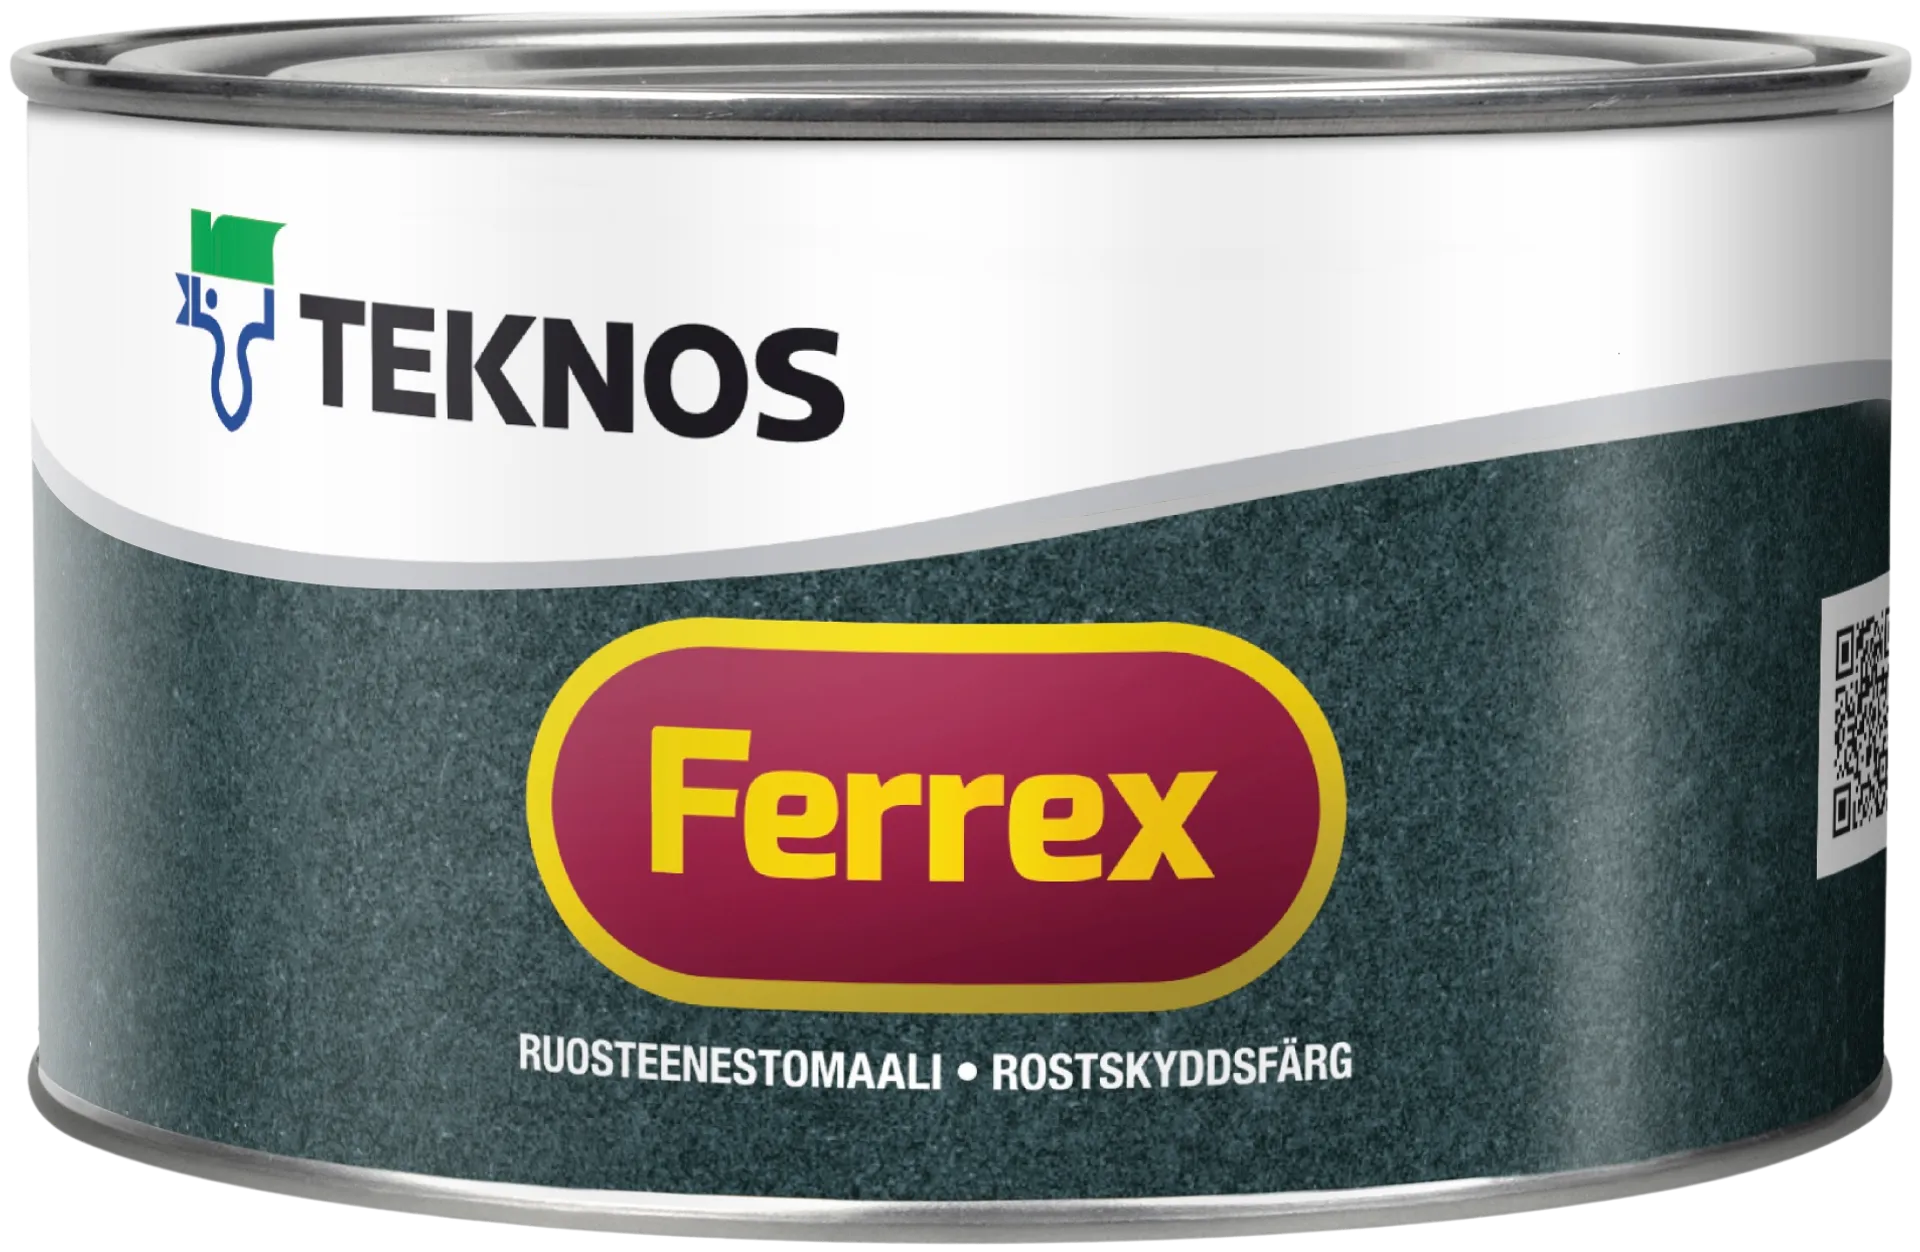 Teknos Ferrex ruosteenestomaali 0,33l harmaa